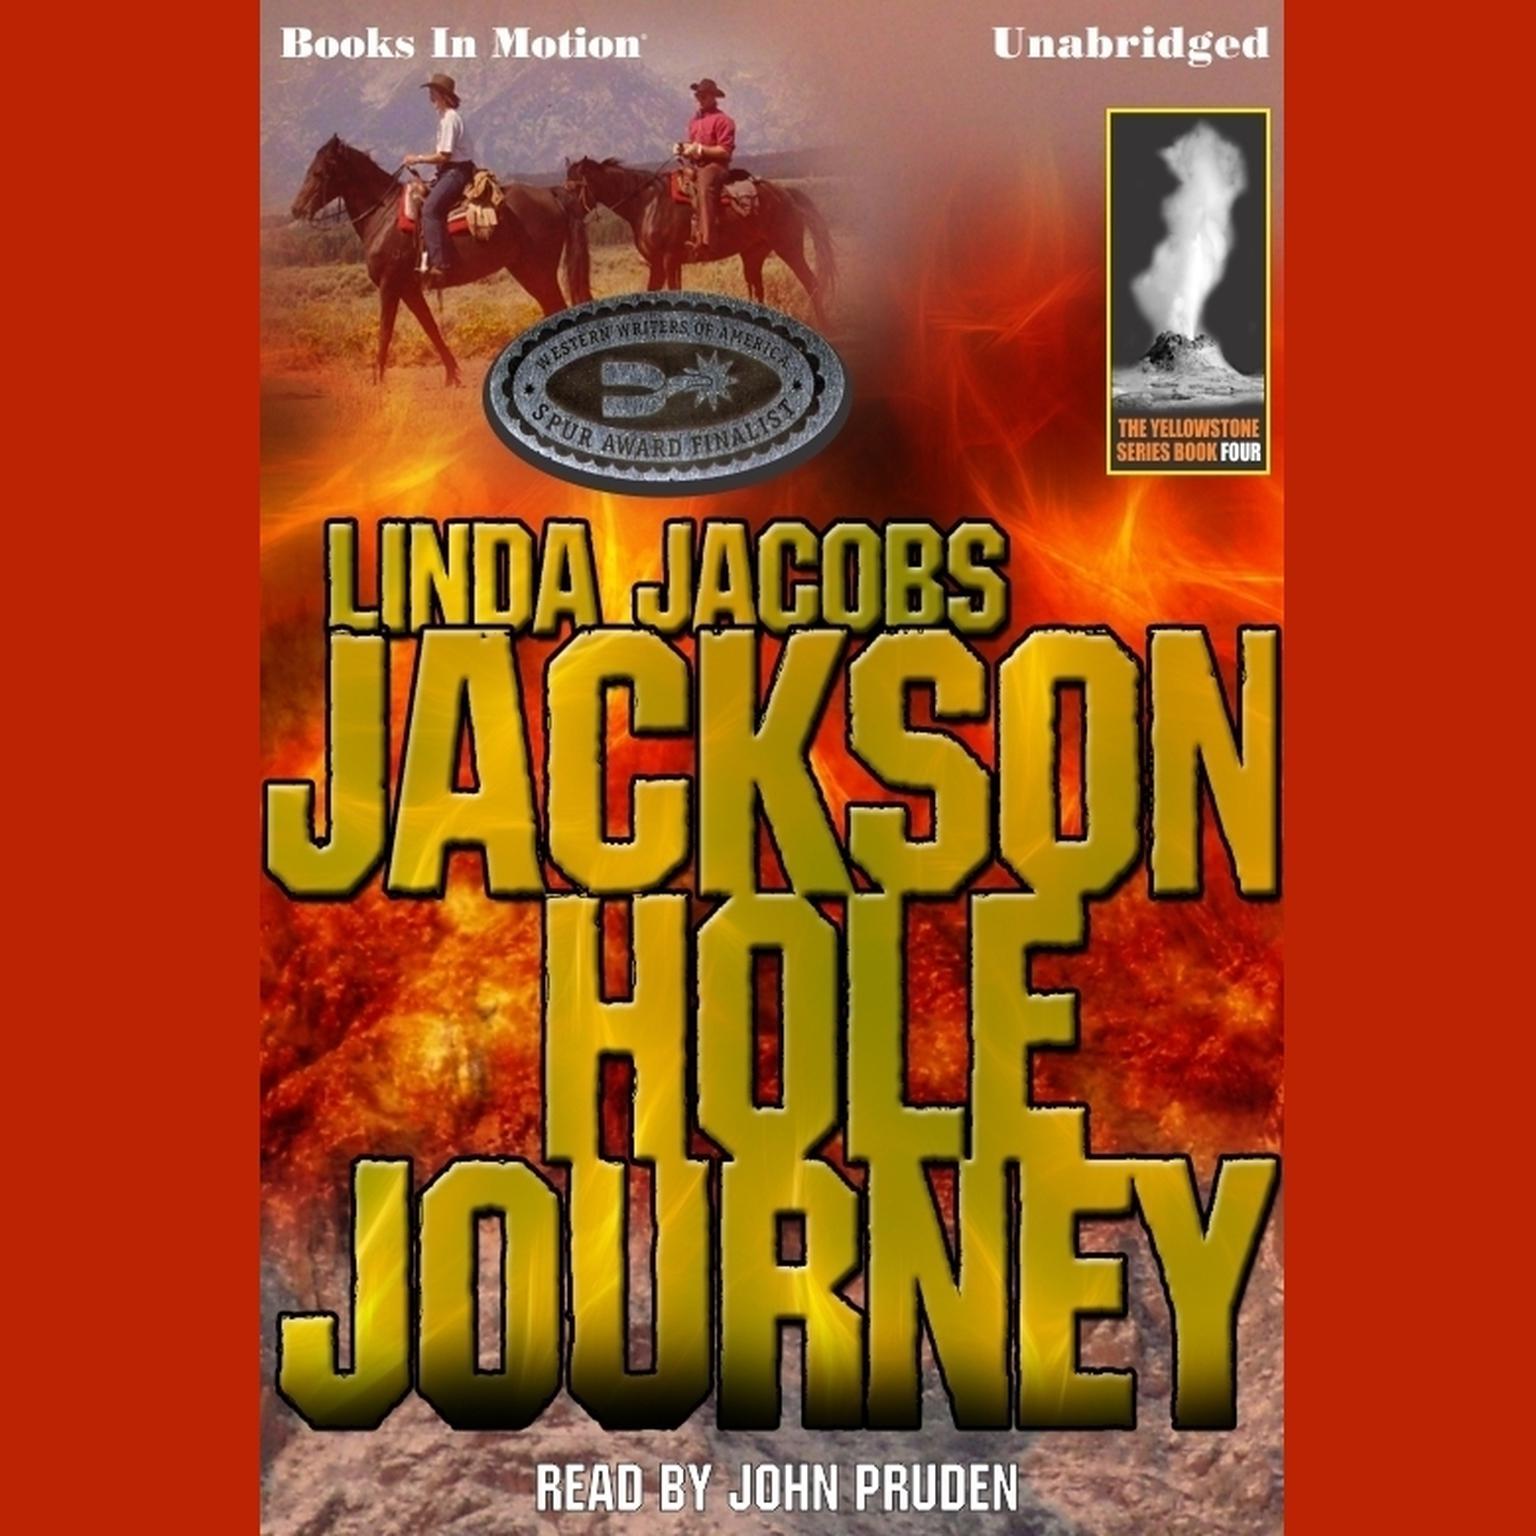 Jackson Hole Journey Audiobook, by Linda Jacobs